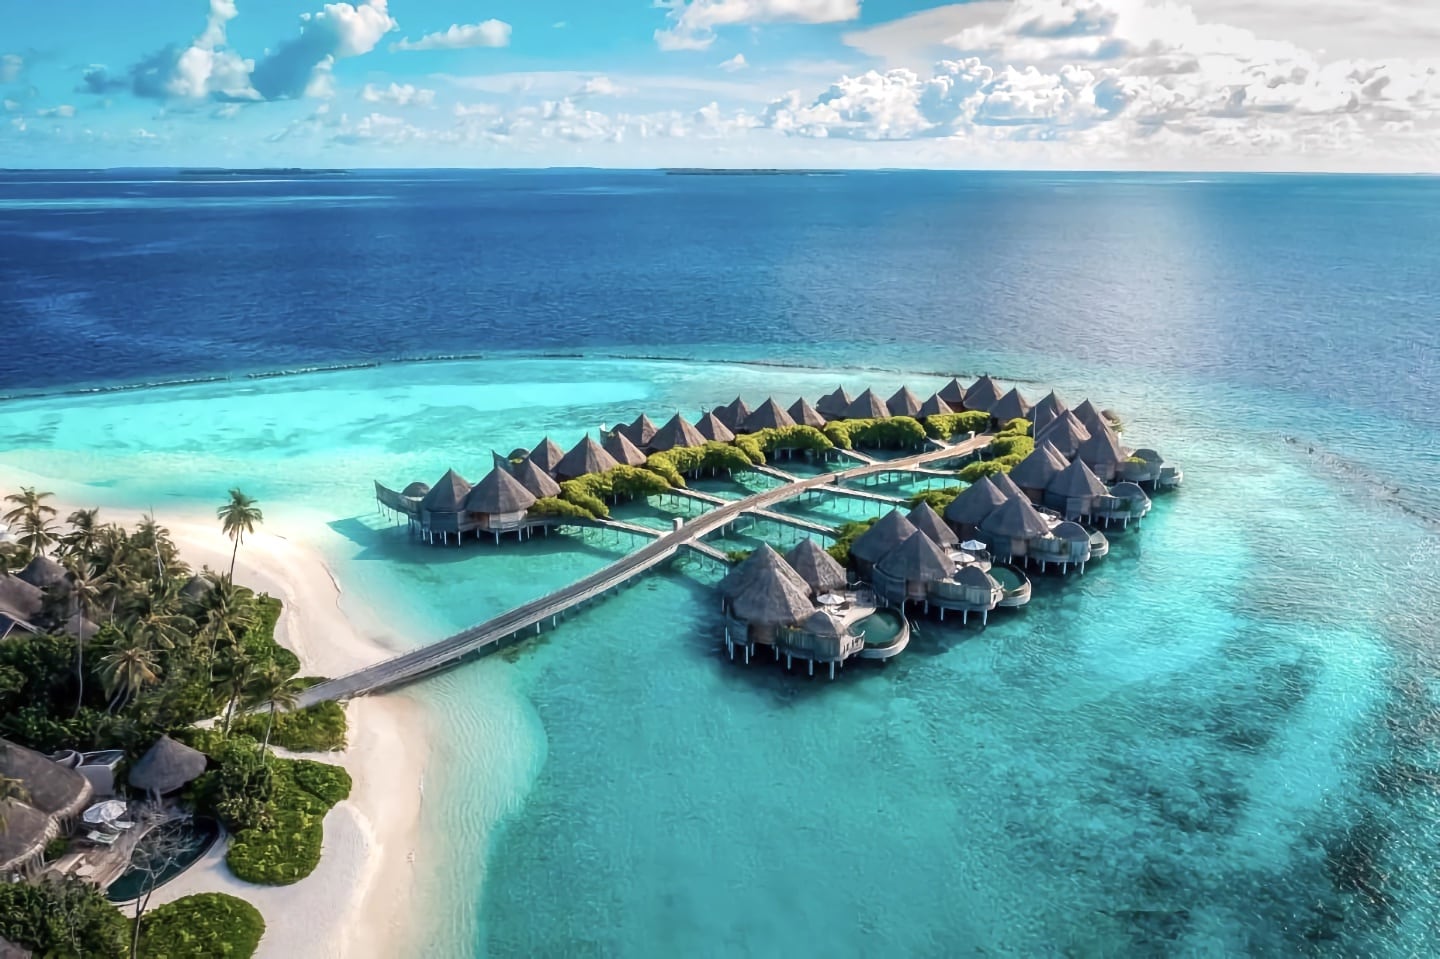 The Nautilus Maldives luxury resorts